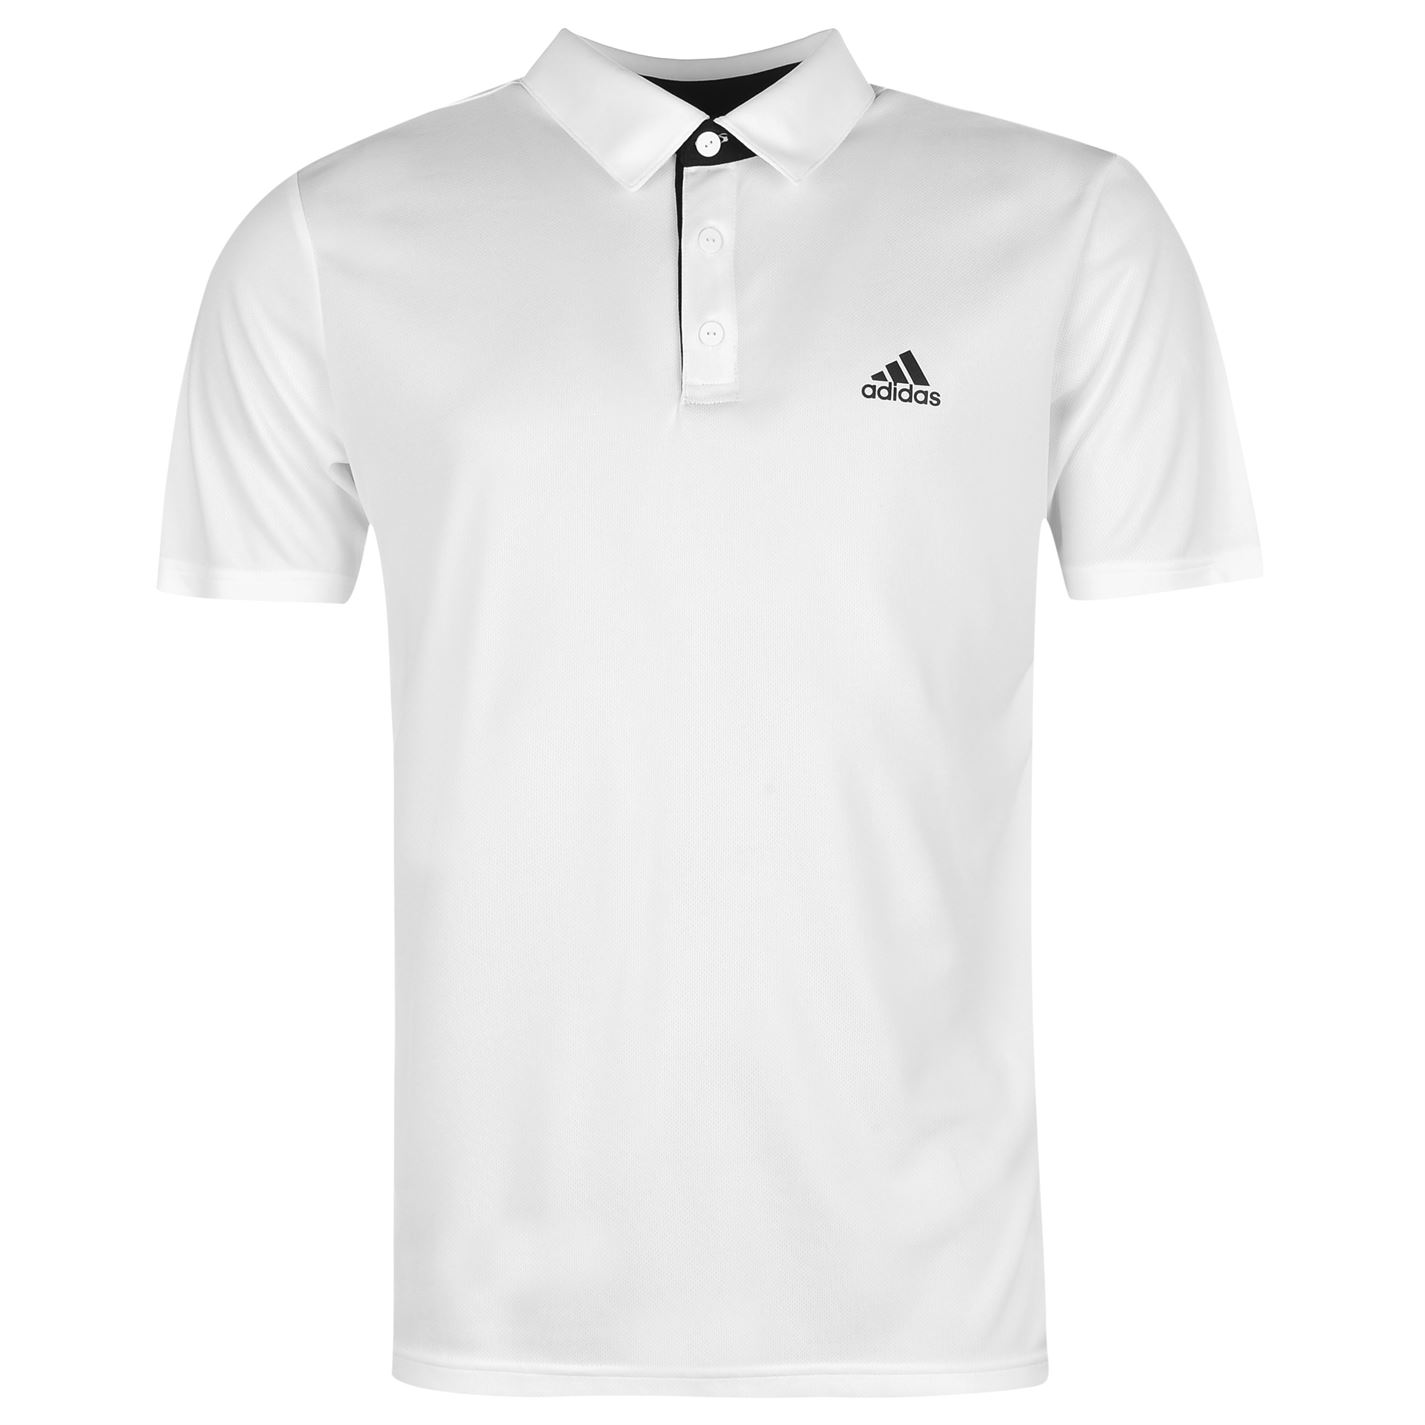 Tricouri Polo adidas Approach tenis pentru Barbati alb negru